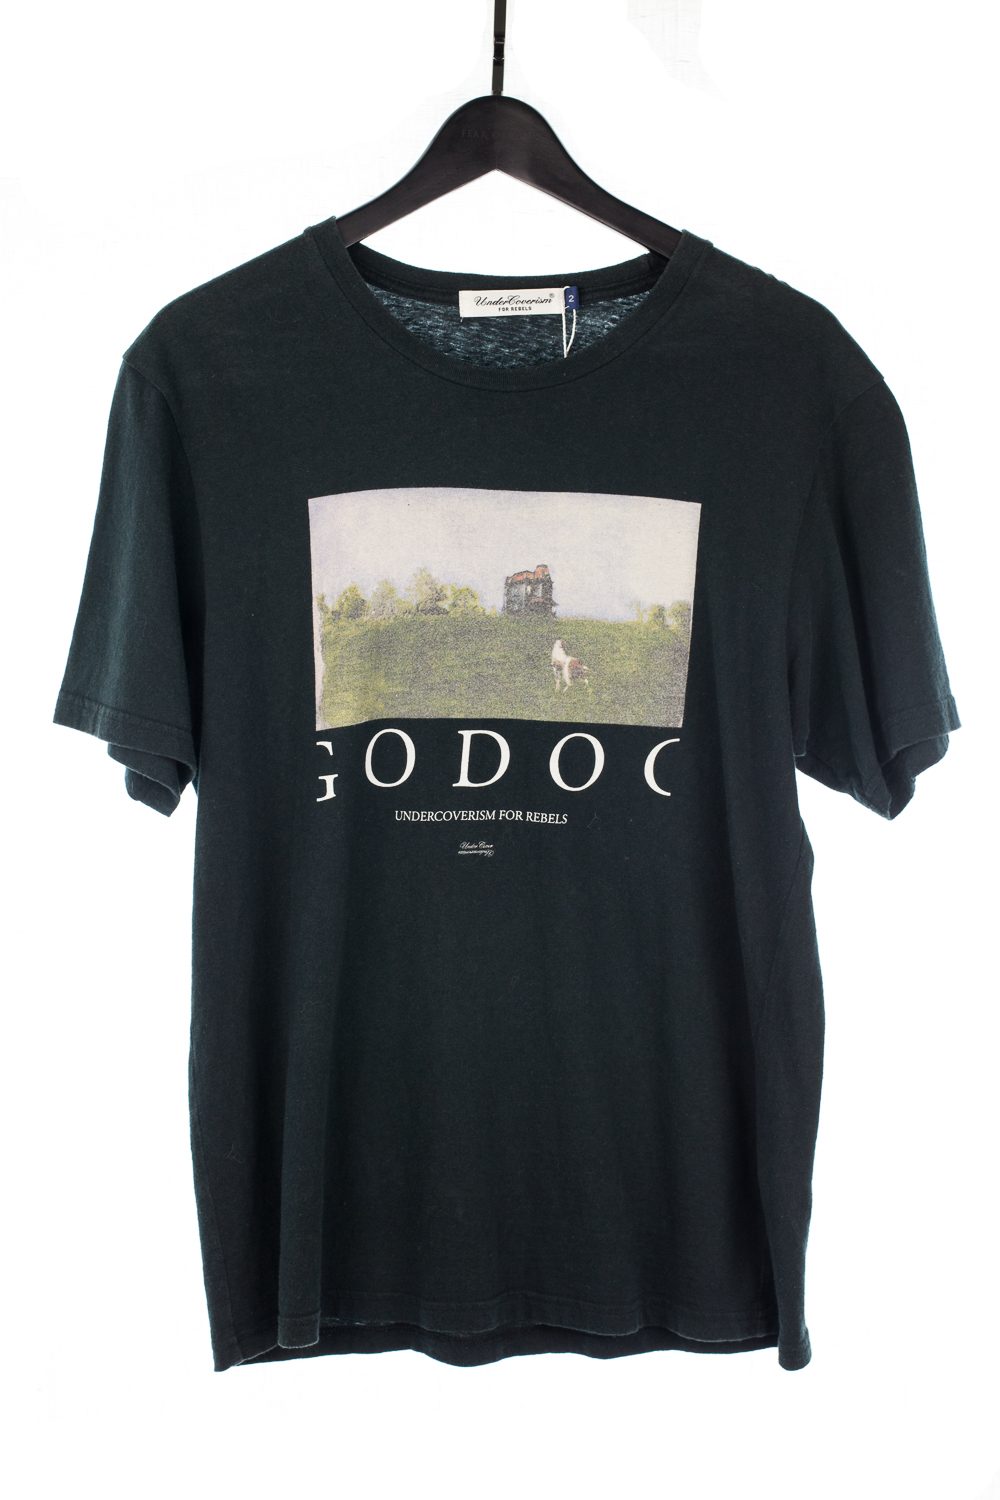 SS14 “GODOG” Self-Titled Shirt